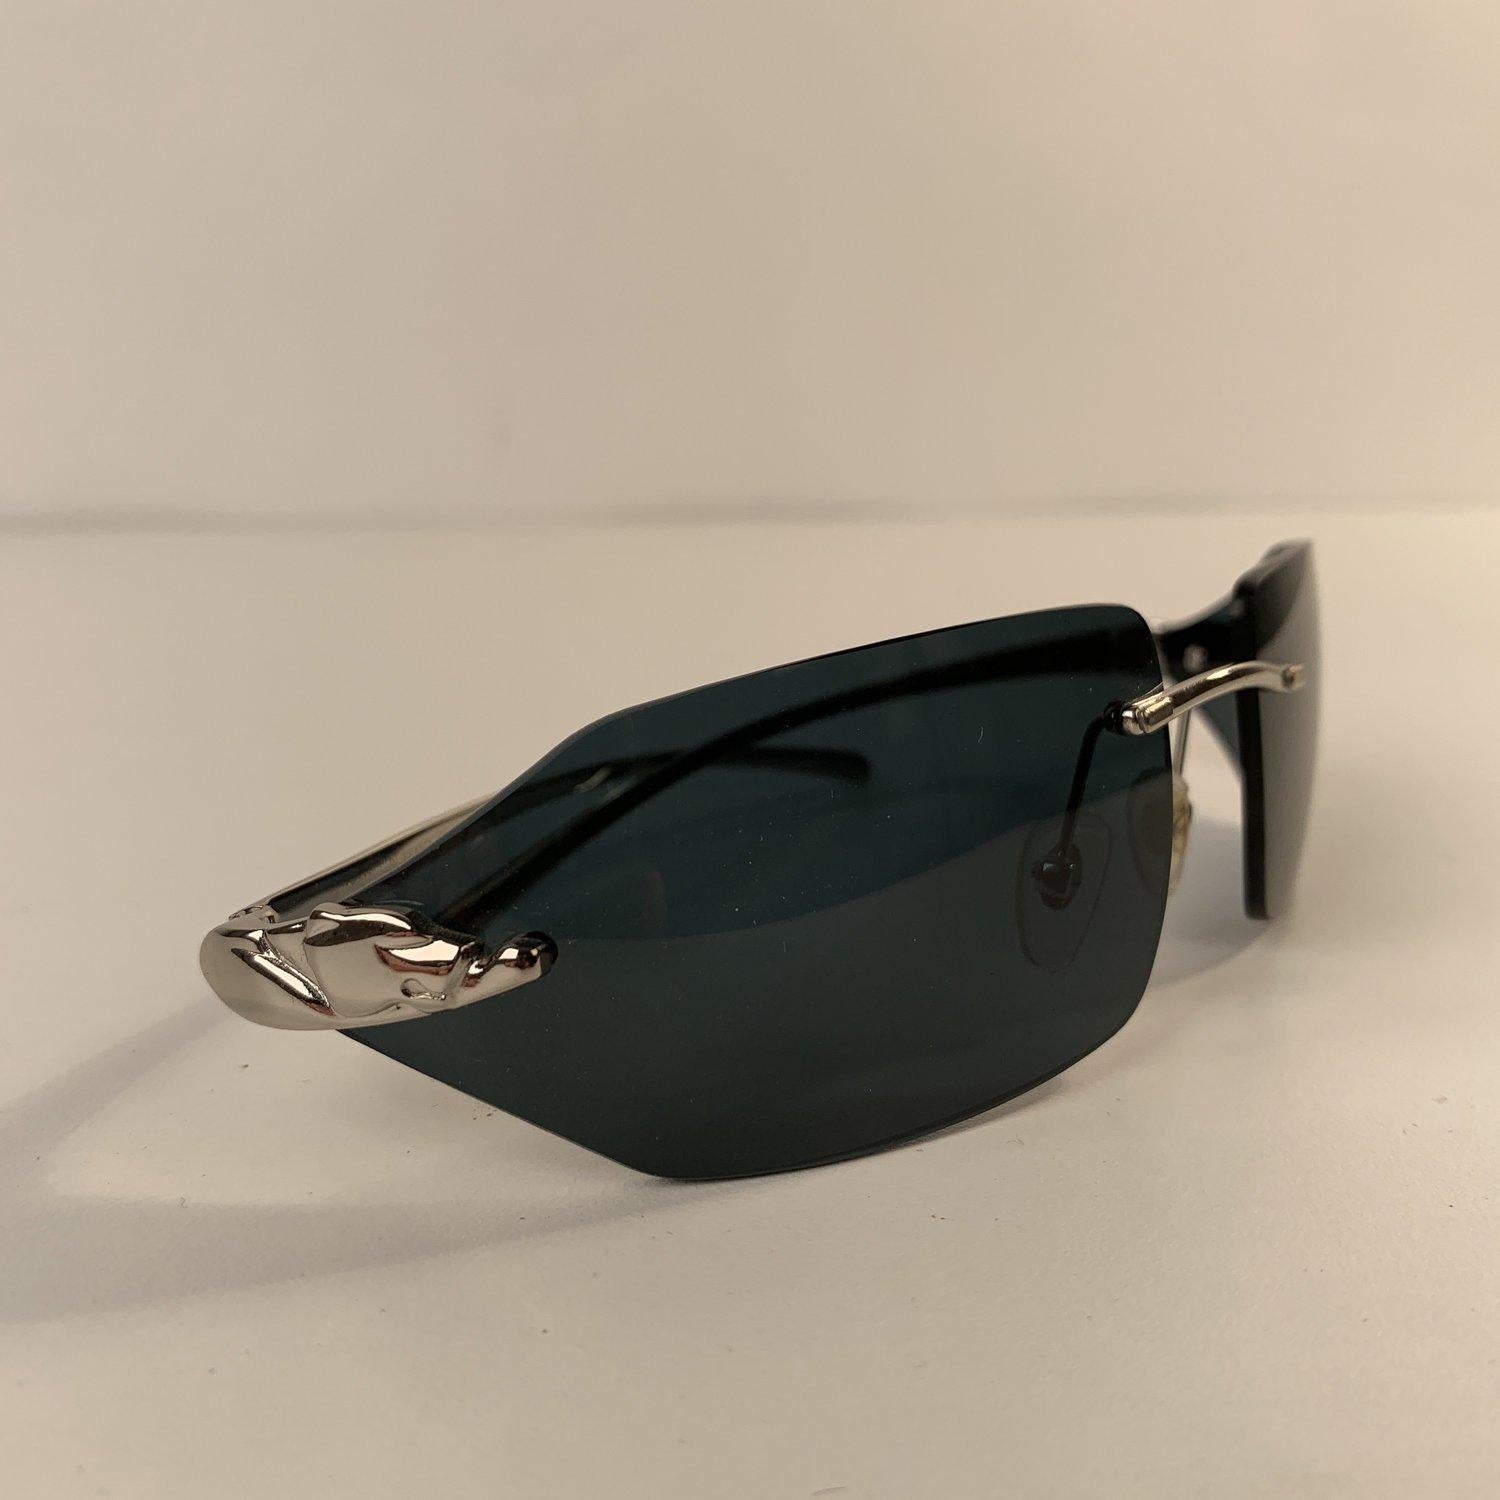 cartier paris 110 sunglasses price